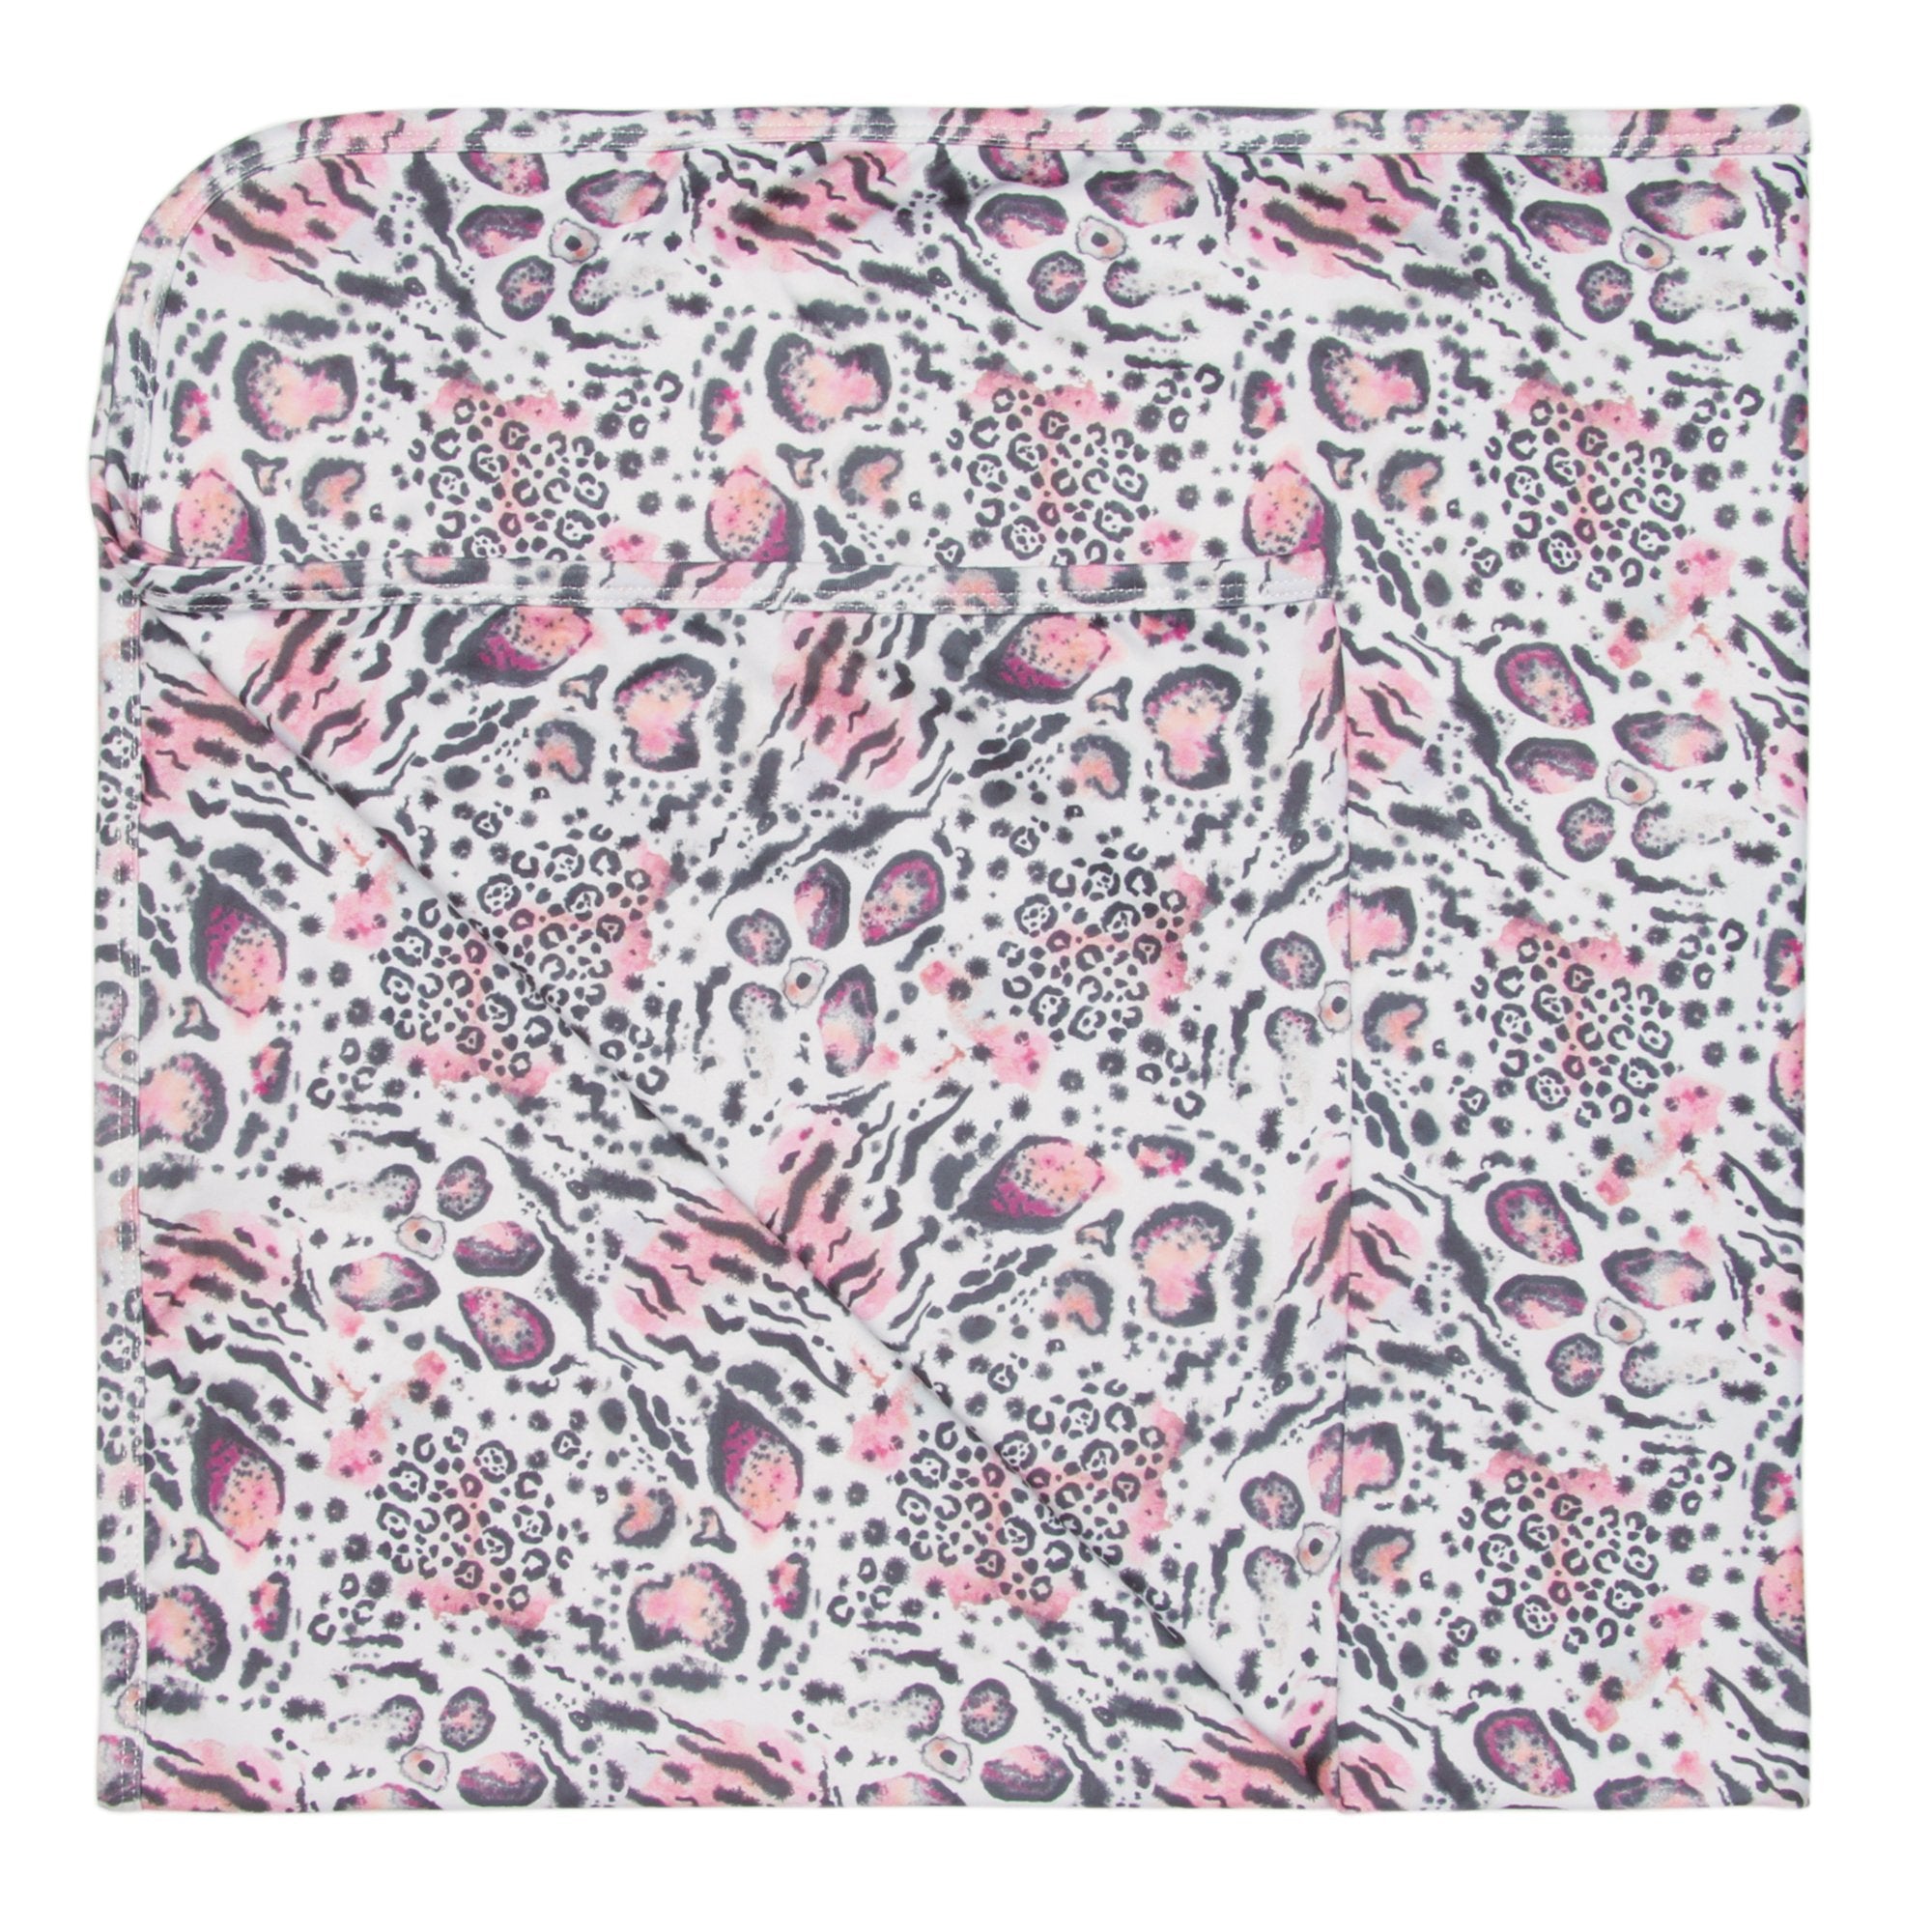 Banded Wonderones- Pink Leopard Blanket